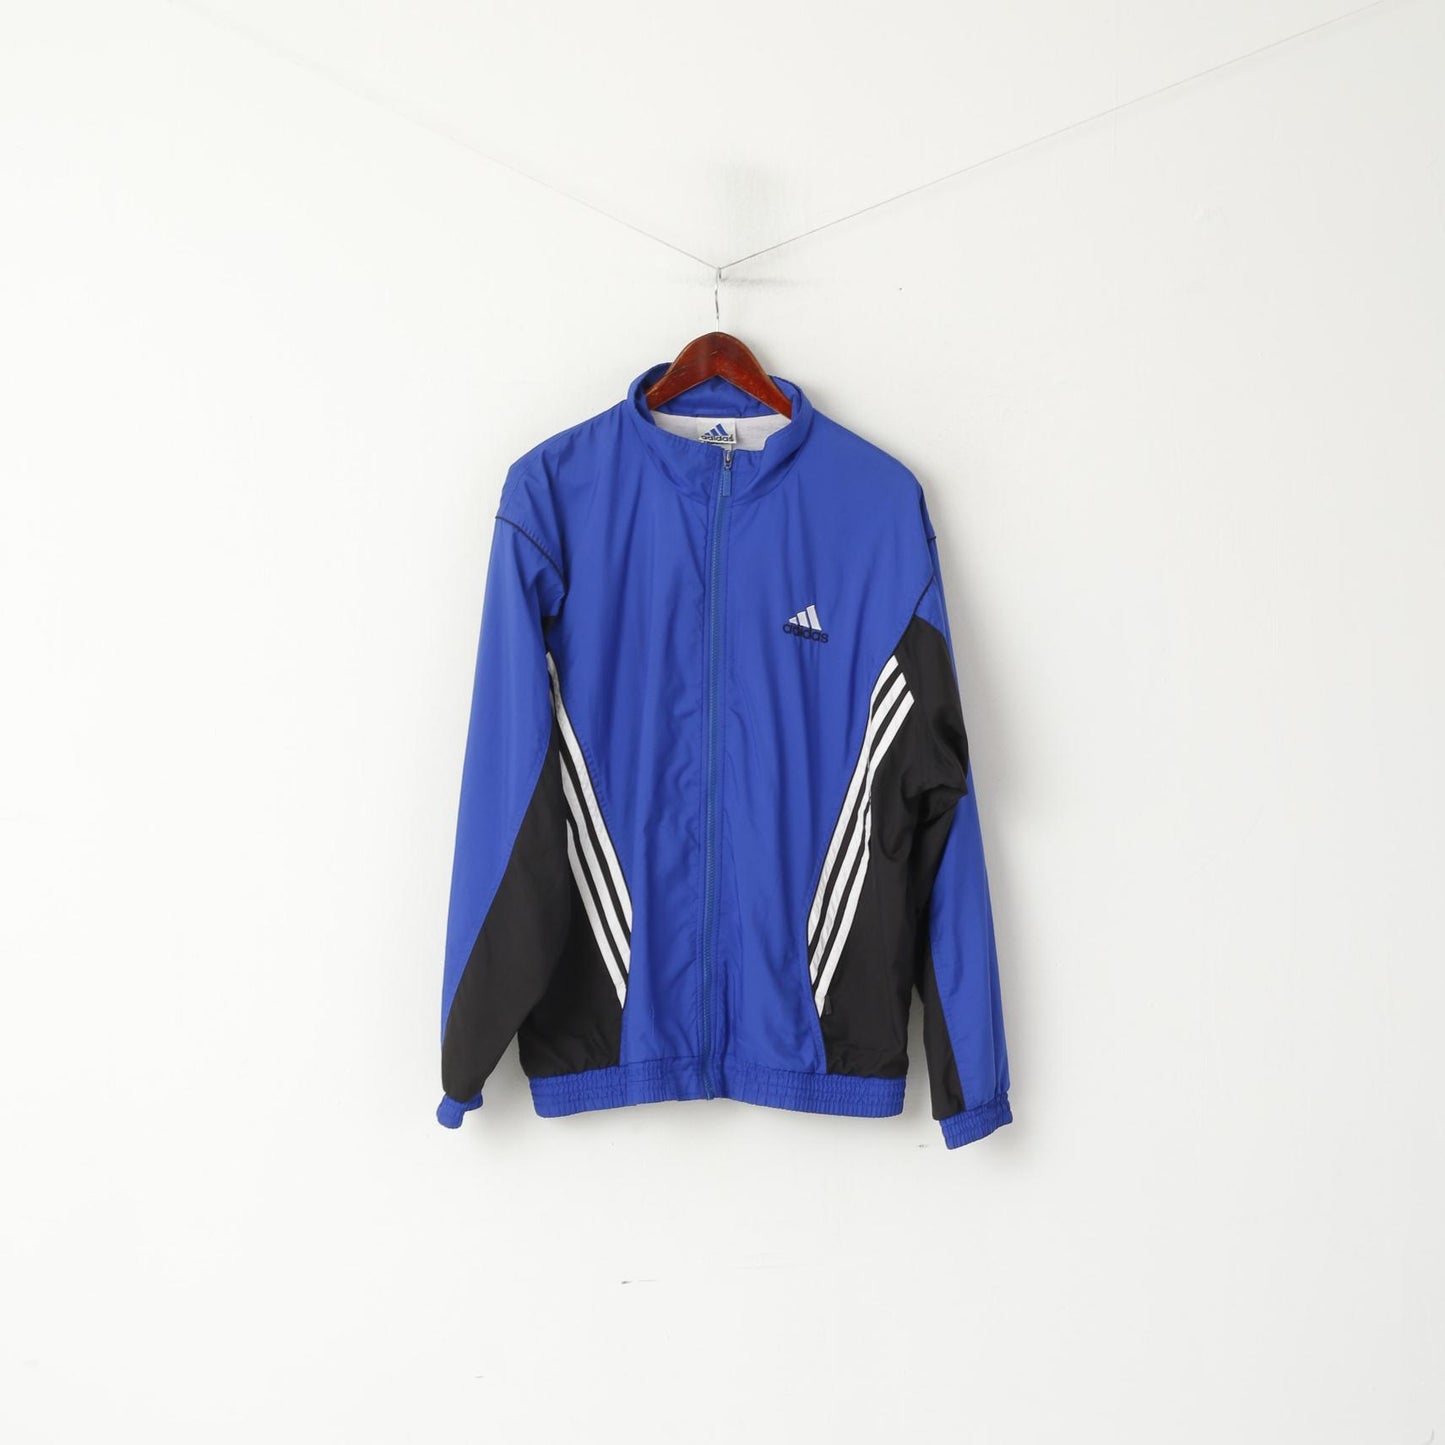 Adidas Uomo L 186 Giacca Blu Vintage Zip Up Bomber Active '00 Sportswear Top